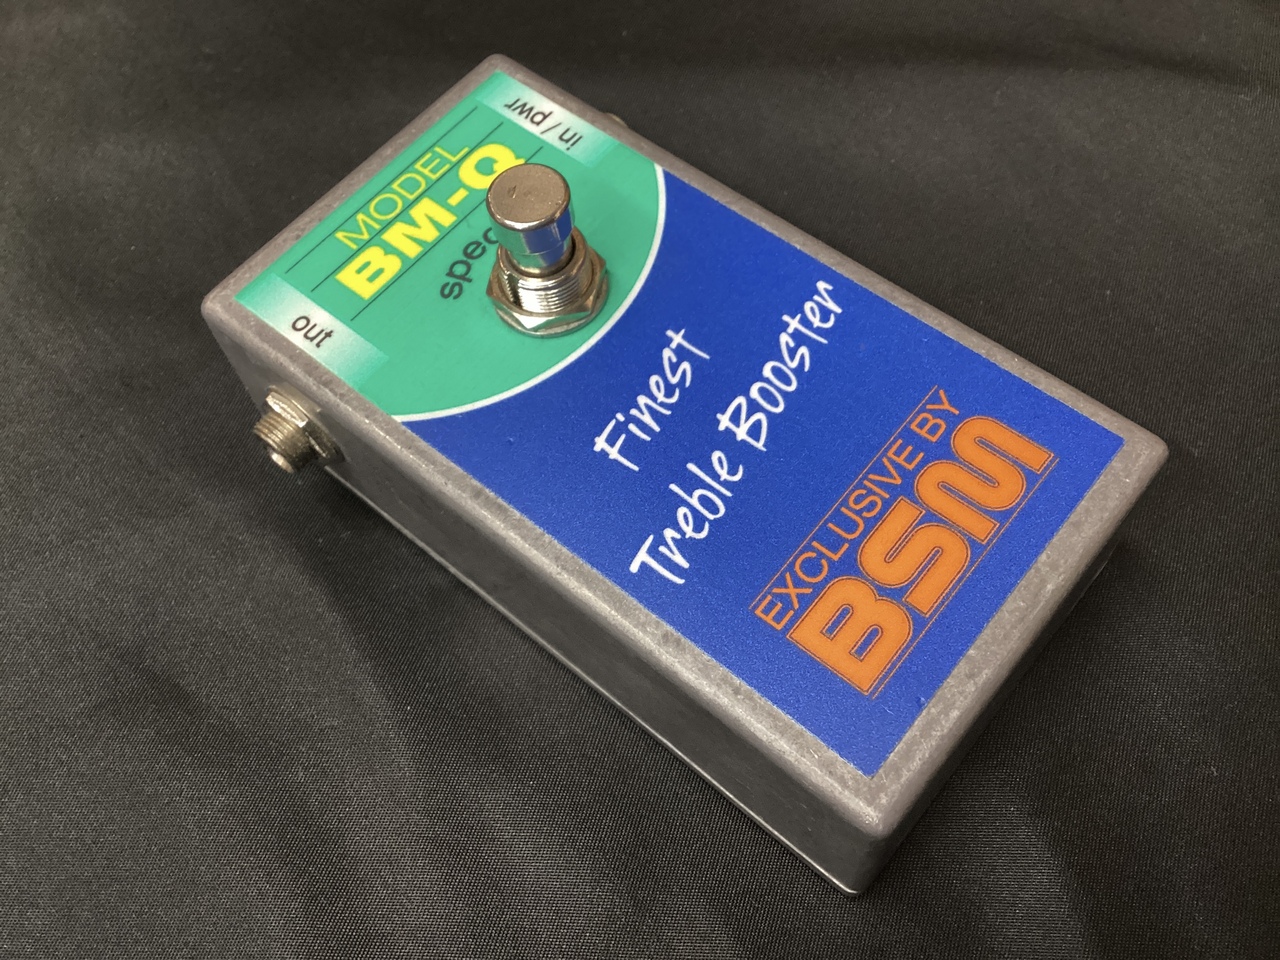 BSM BM-Q (トレブルブースター ブライアンメイ)（中古）【楽器検索 